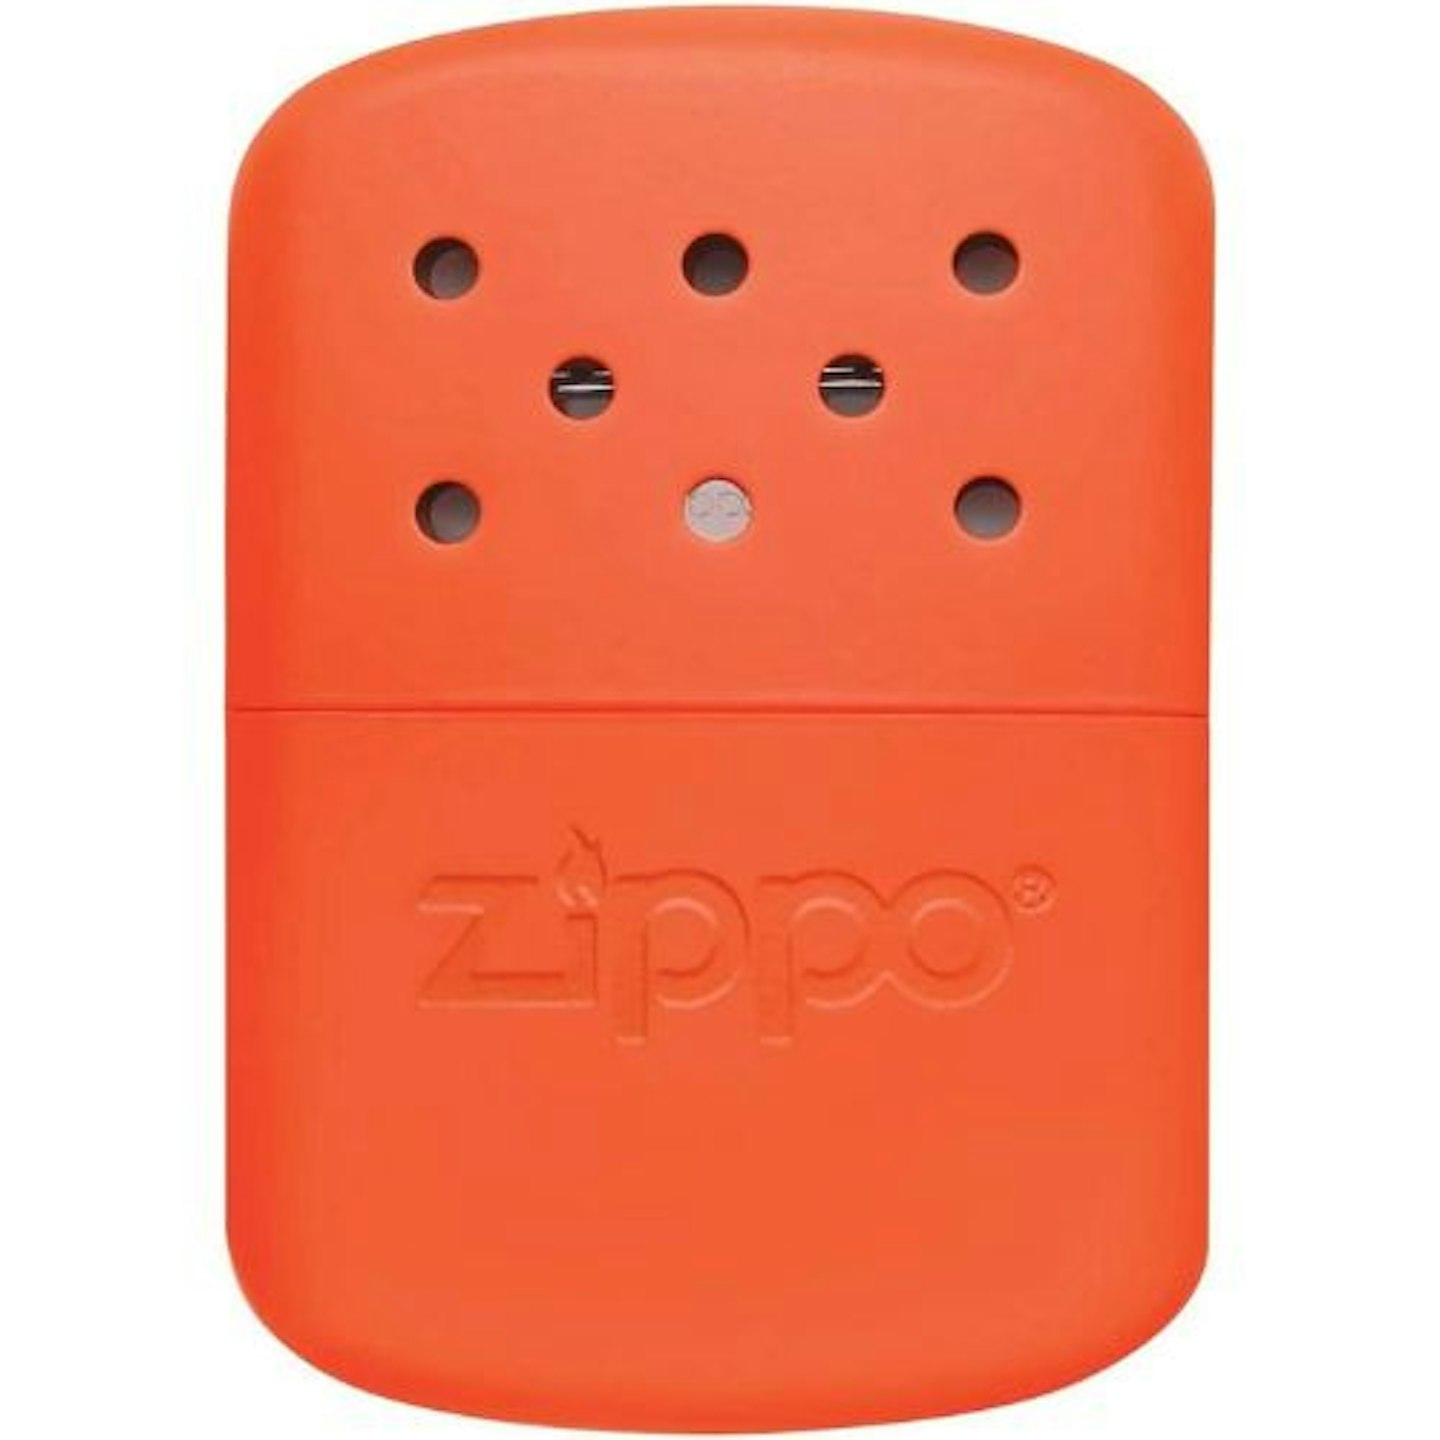 Zippo 12 Hour Refillable Hand Warmer